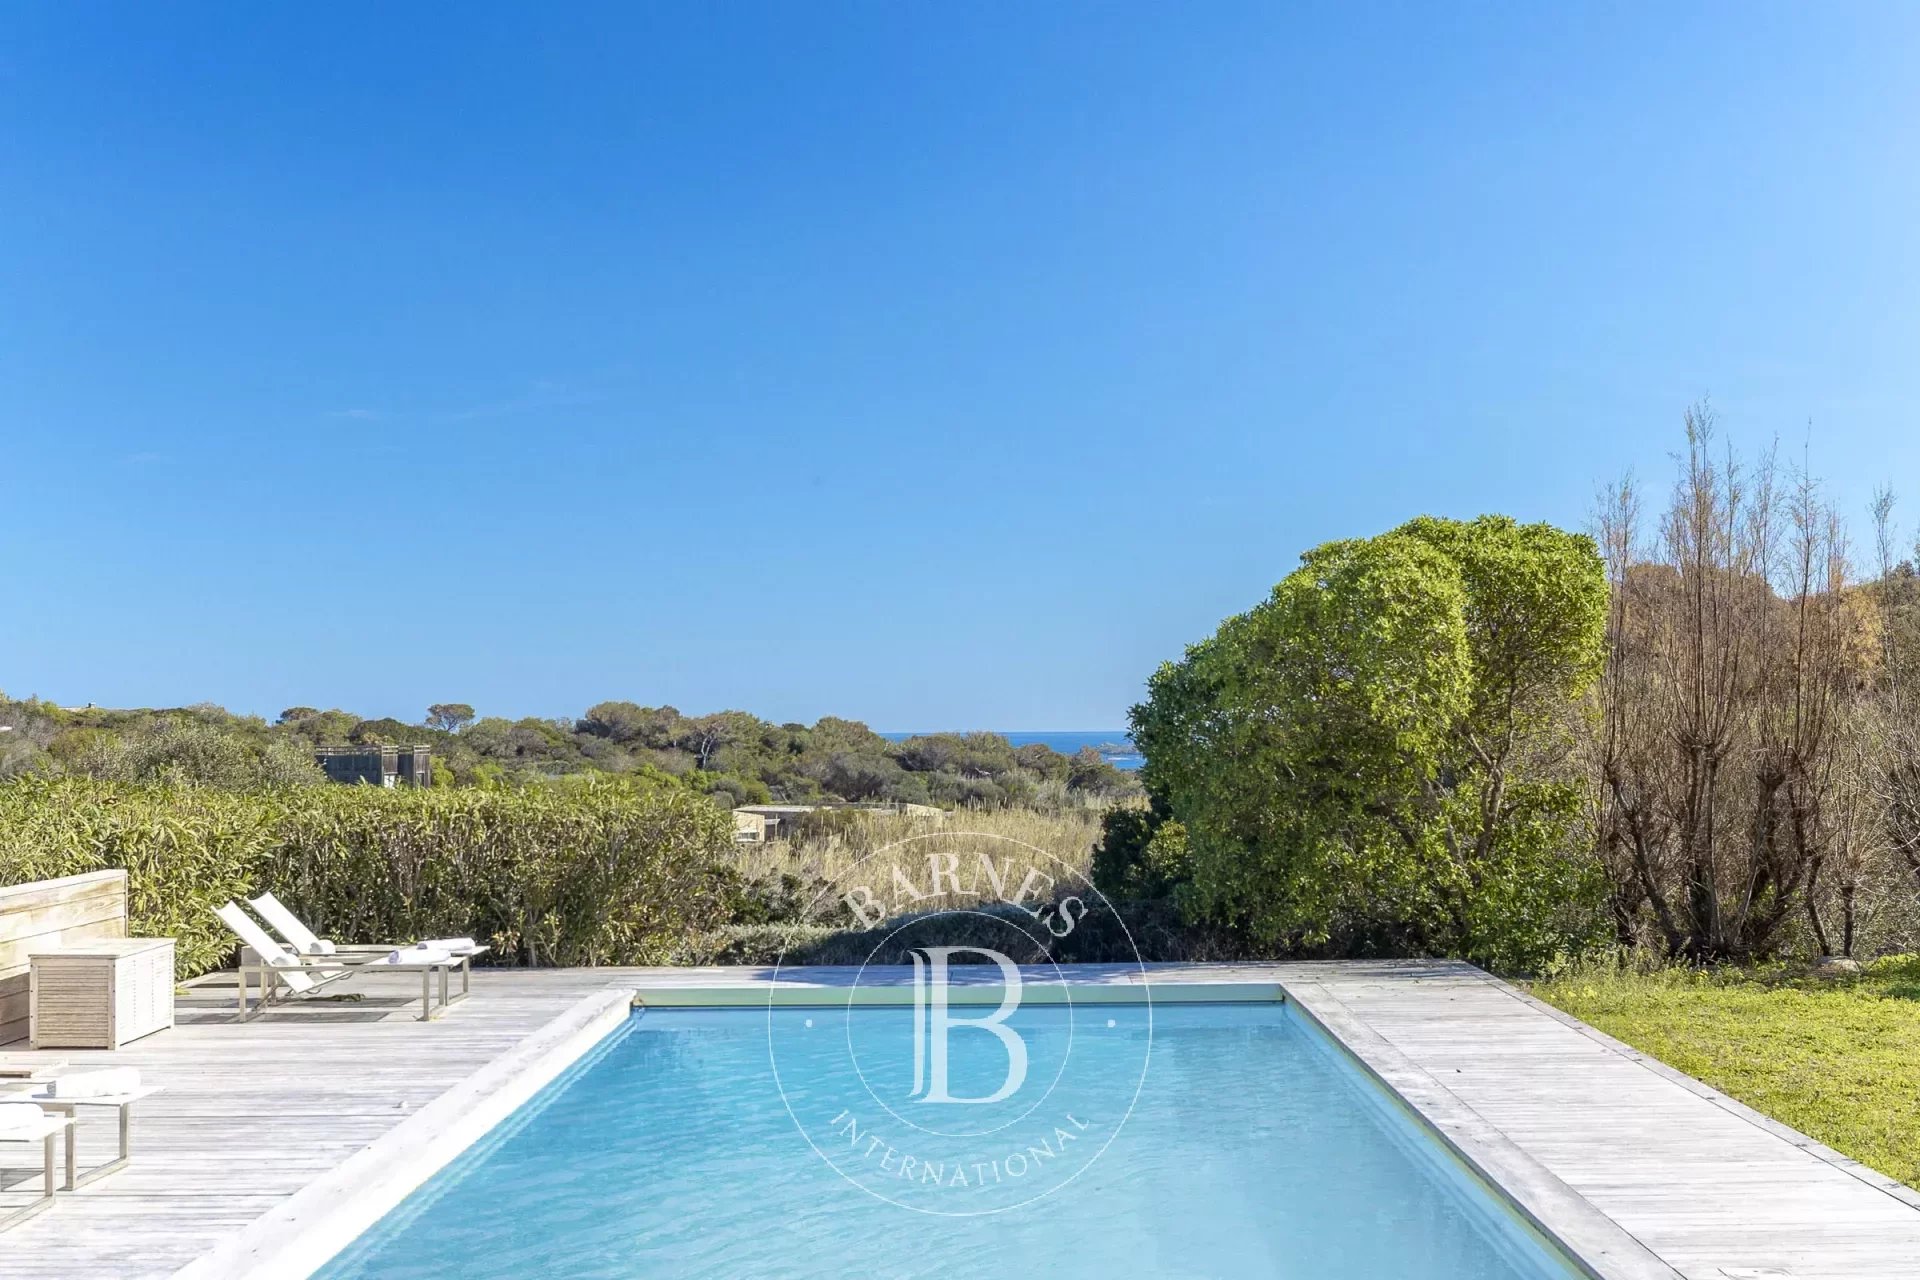 Exclusivité - Bonifacio, Sperone, Villa en pierres, 5 chambres, vue mer, proche plage, proche de Sperone - picture 1 title=